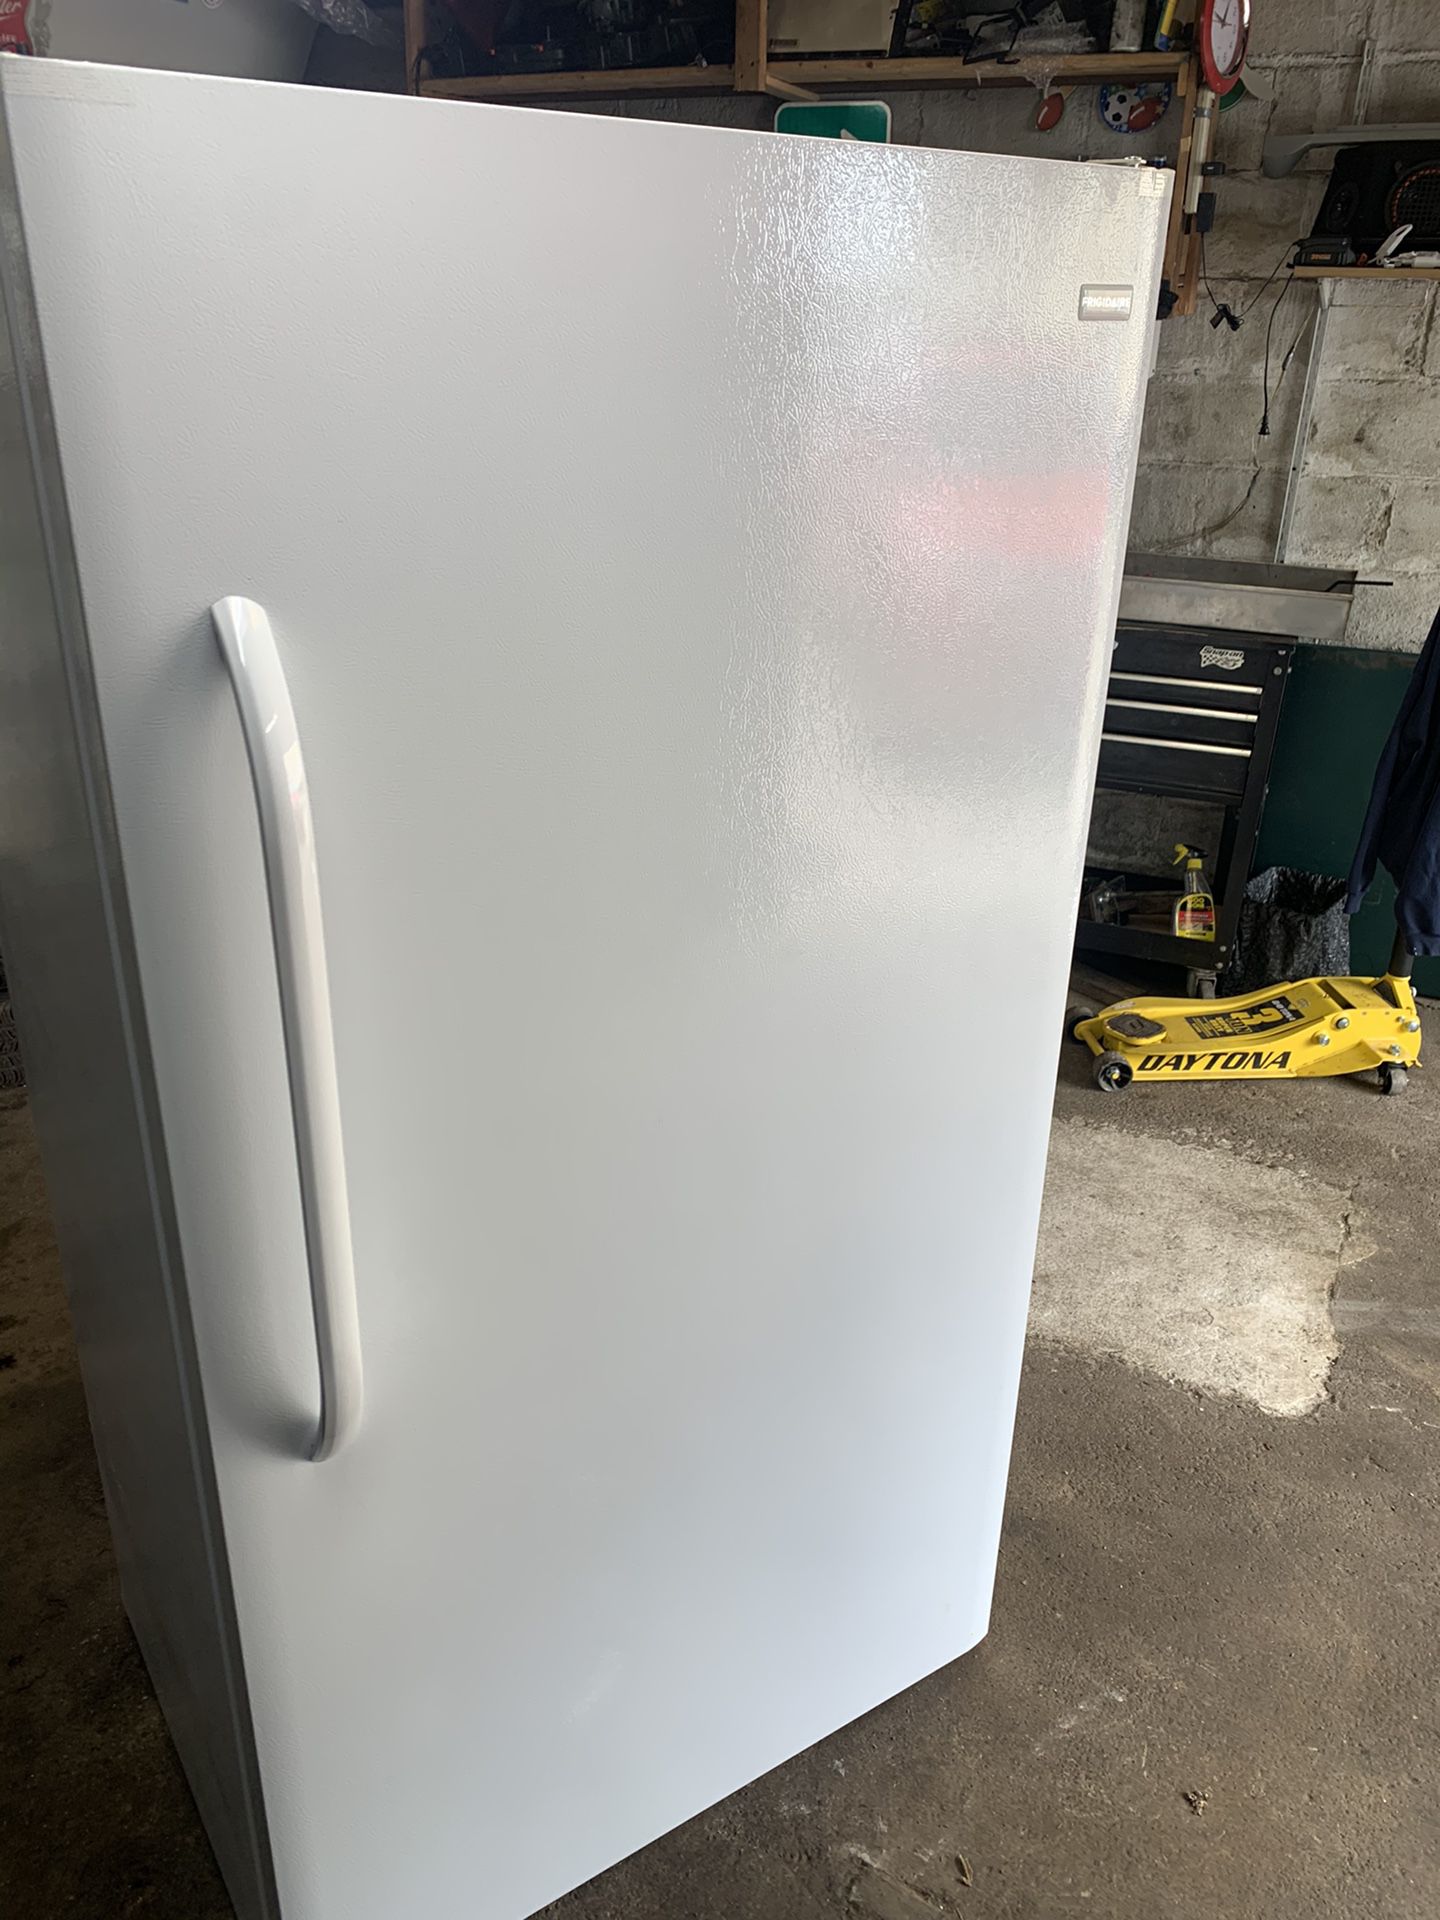 Fridgeair freezerless refrigerator